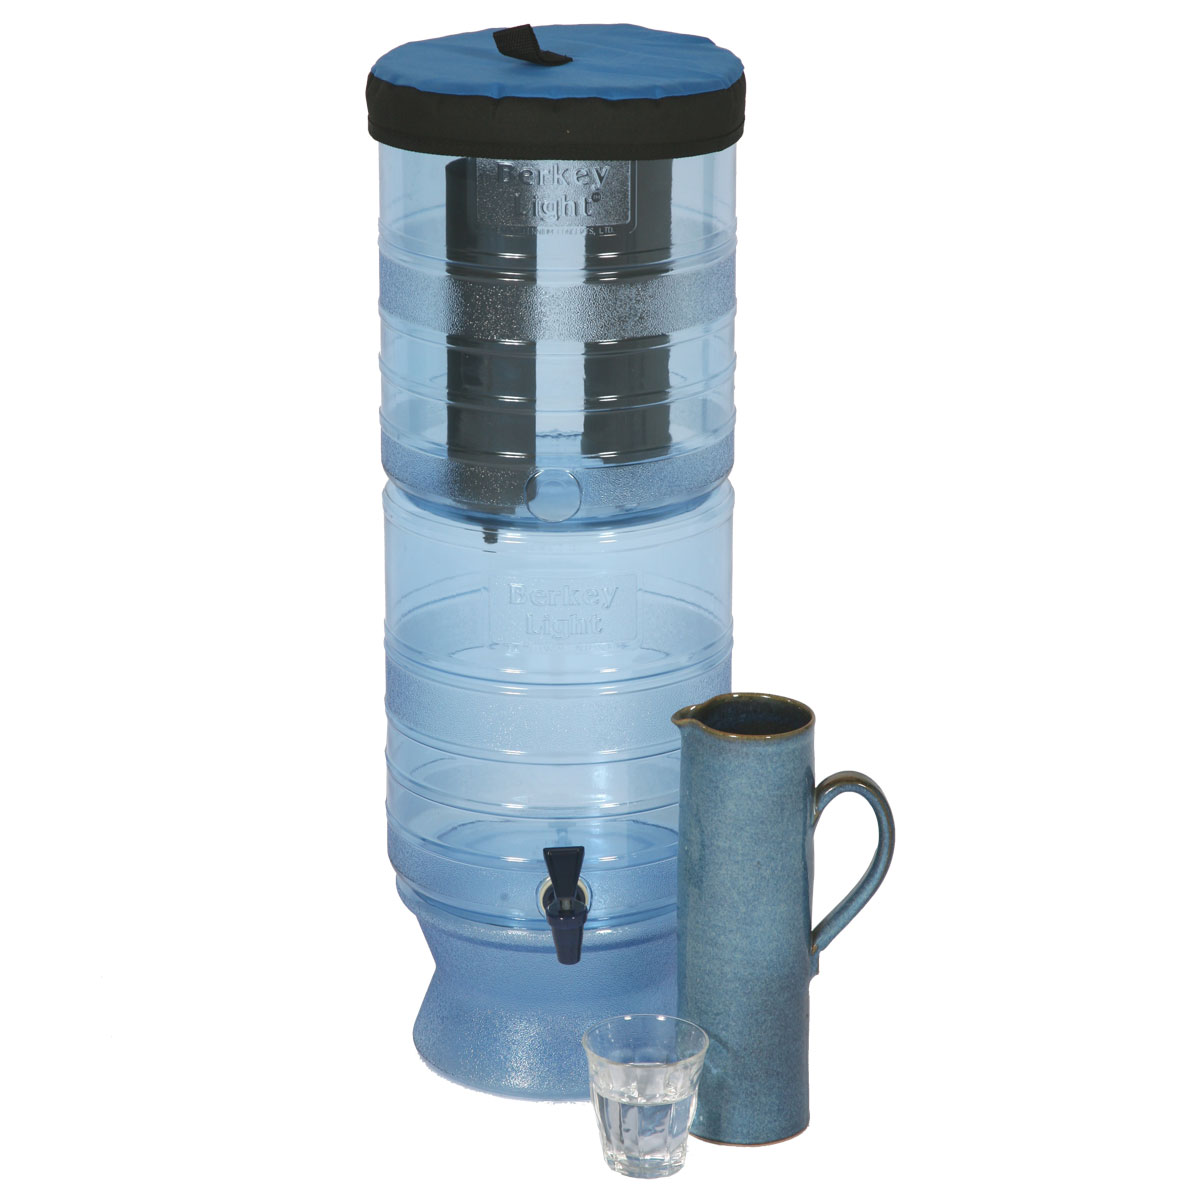 Travel Berkey Water Filter System, with 2 Black Berkey Filters, Two